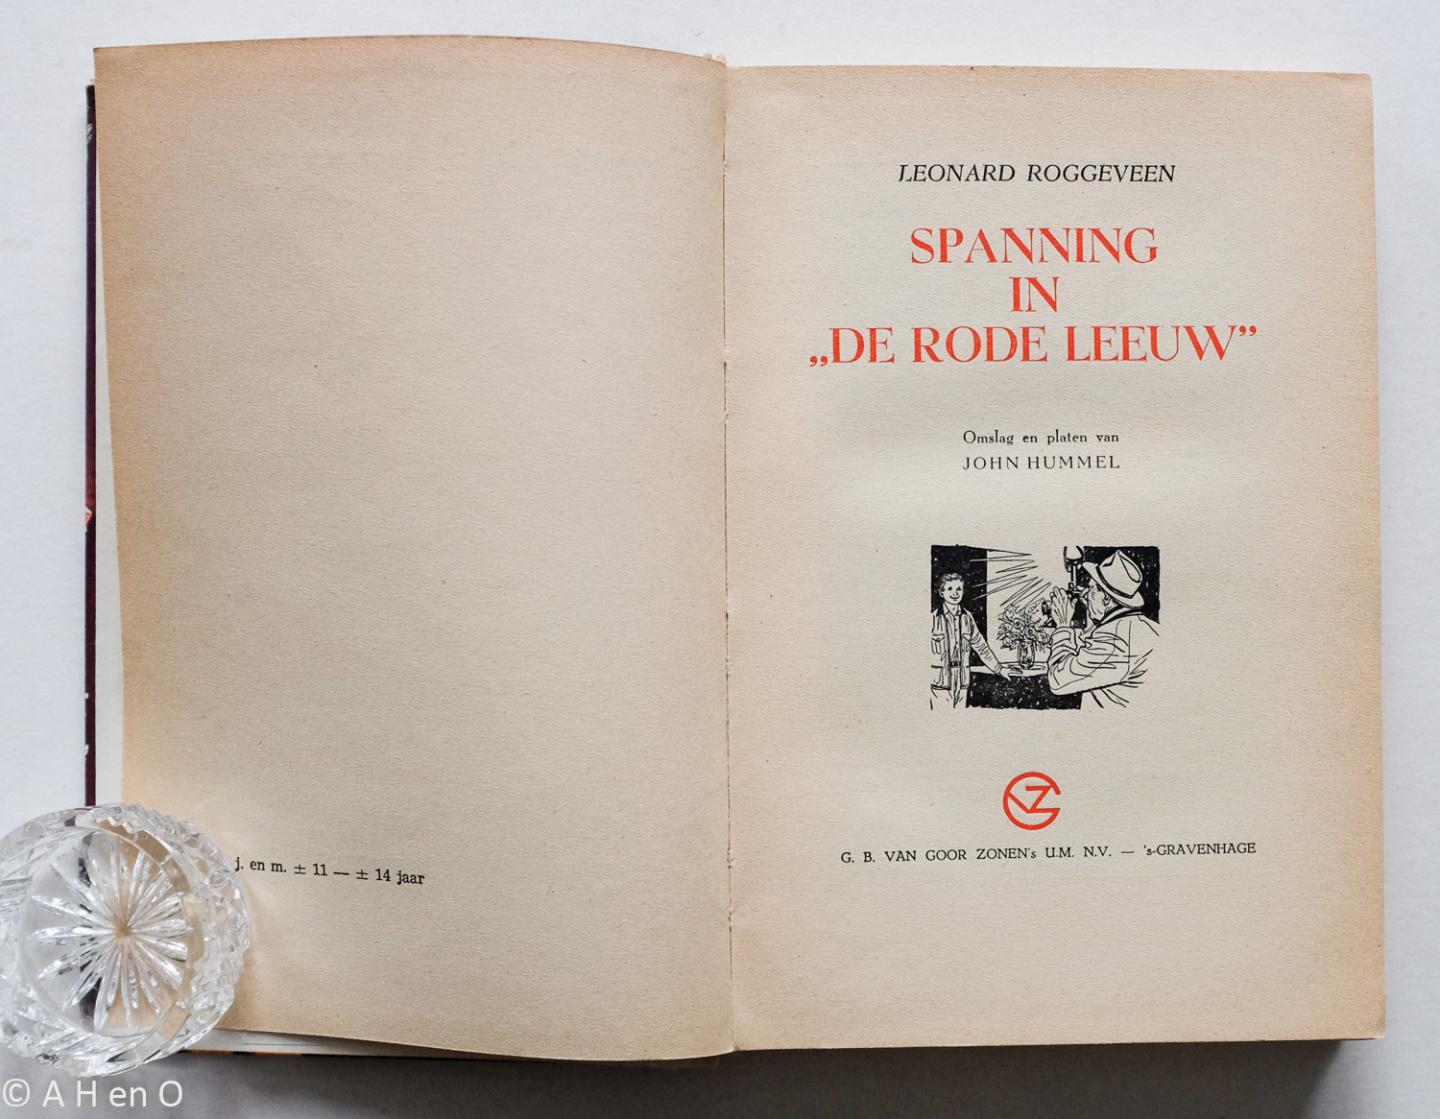 Roggeveen, Leonard  en  John Hummel - Spanning in "De Rode Leeuwʺ  ; omslag en platen van John Hummel.